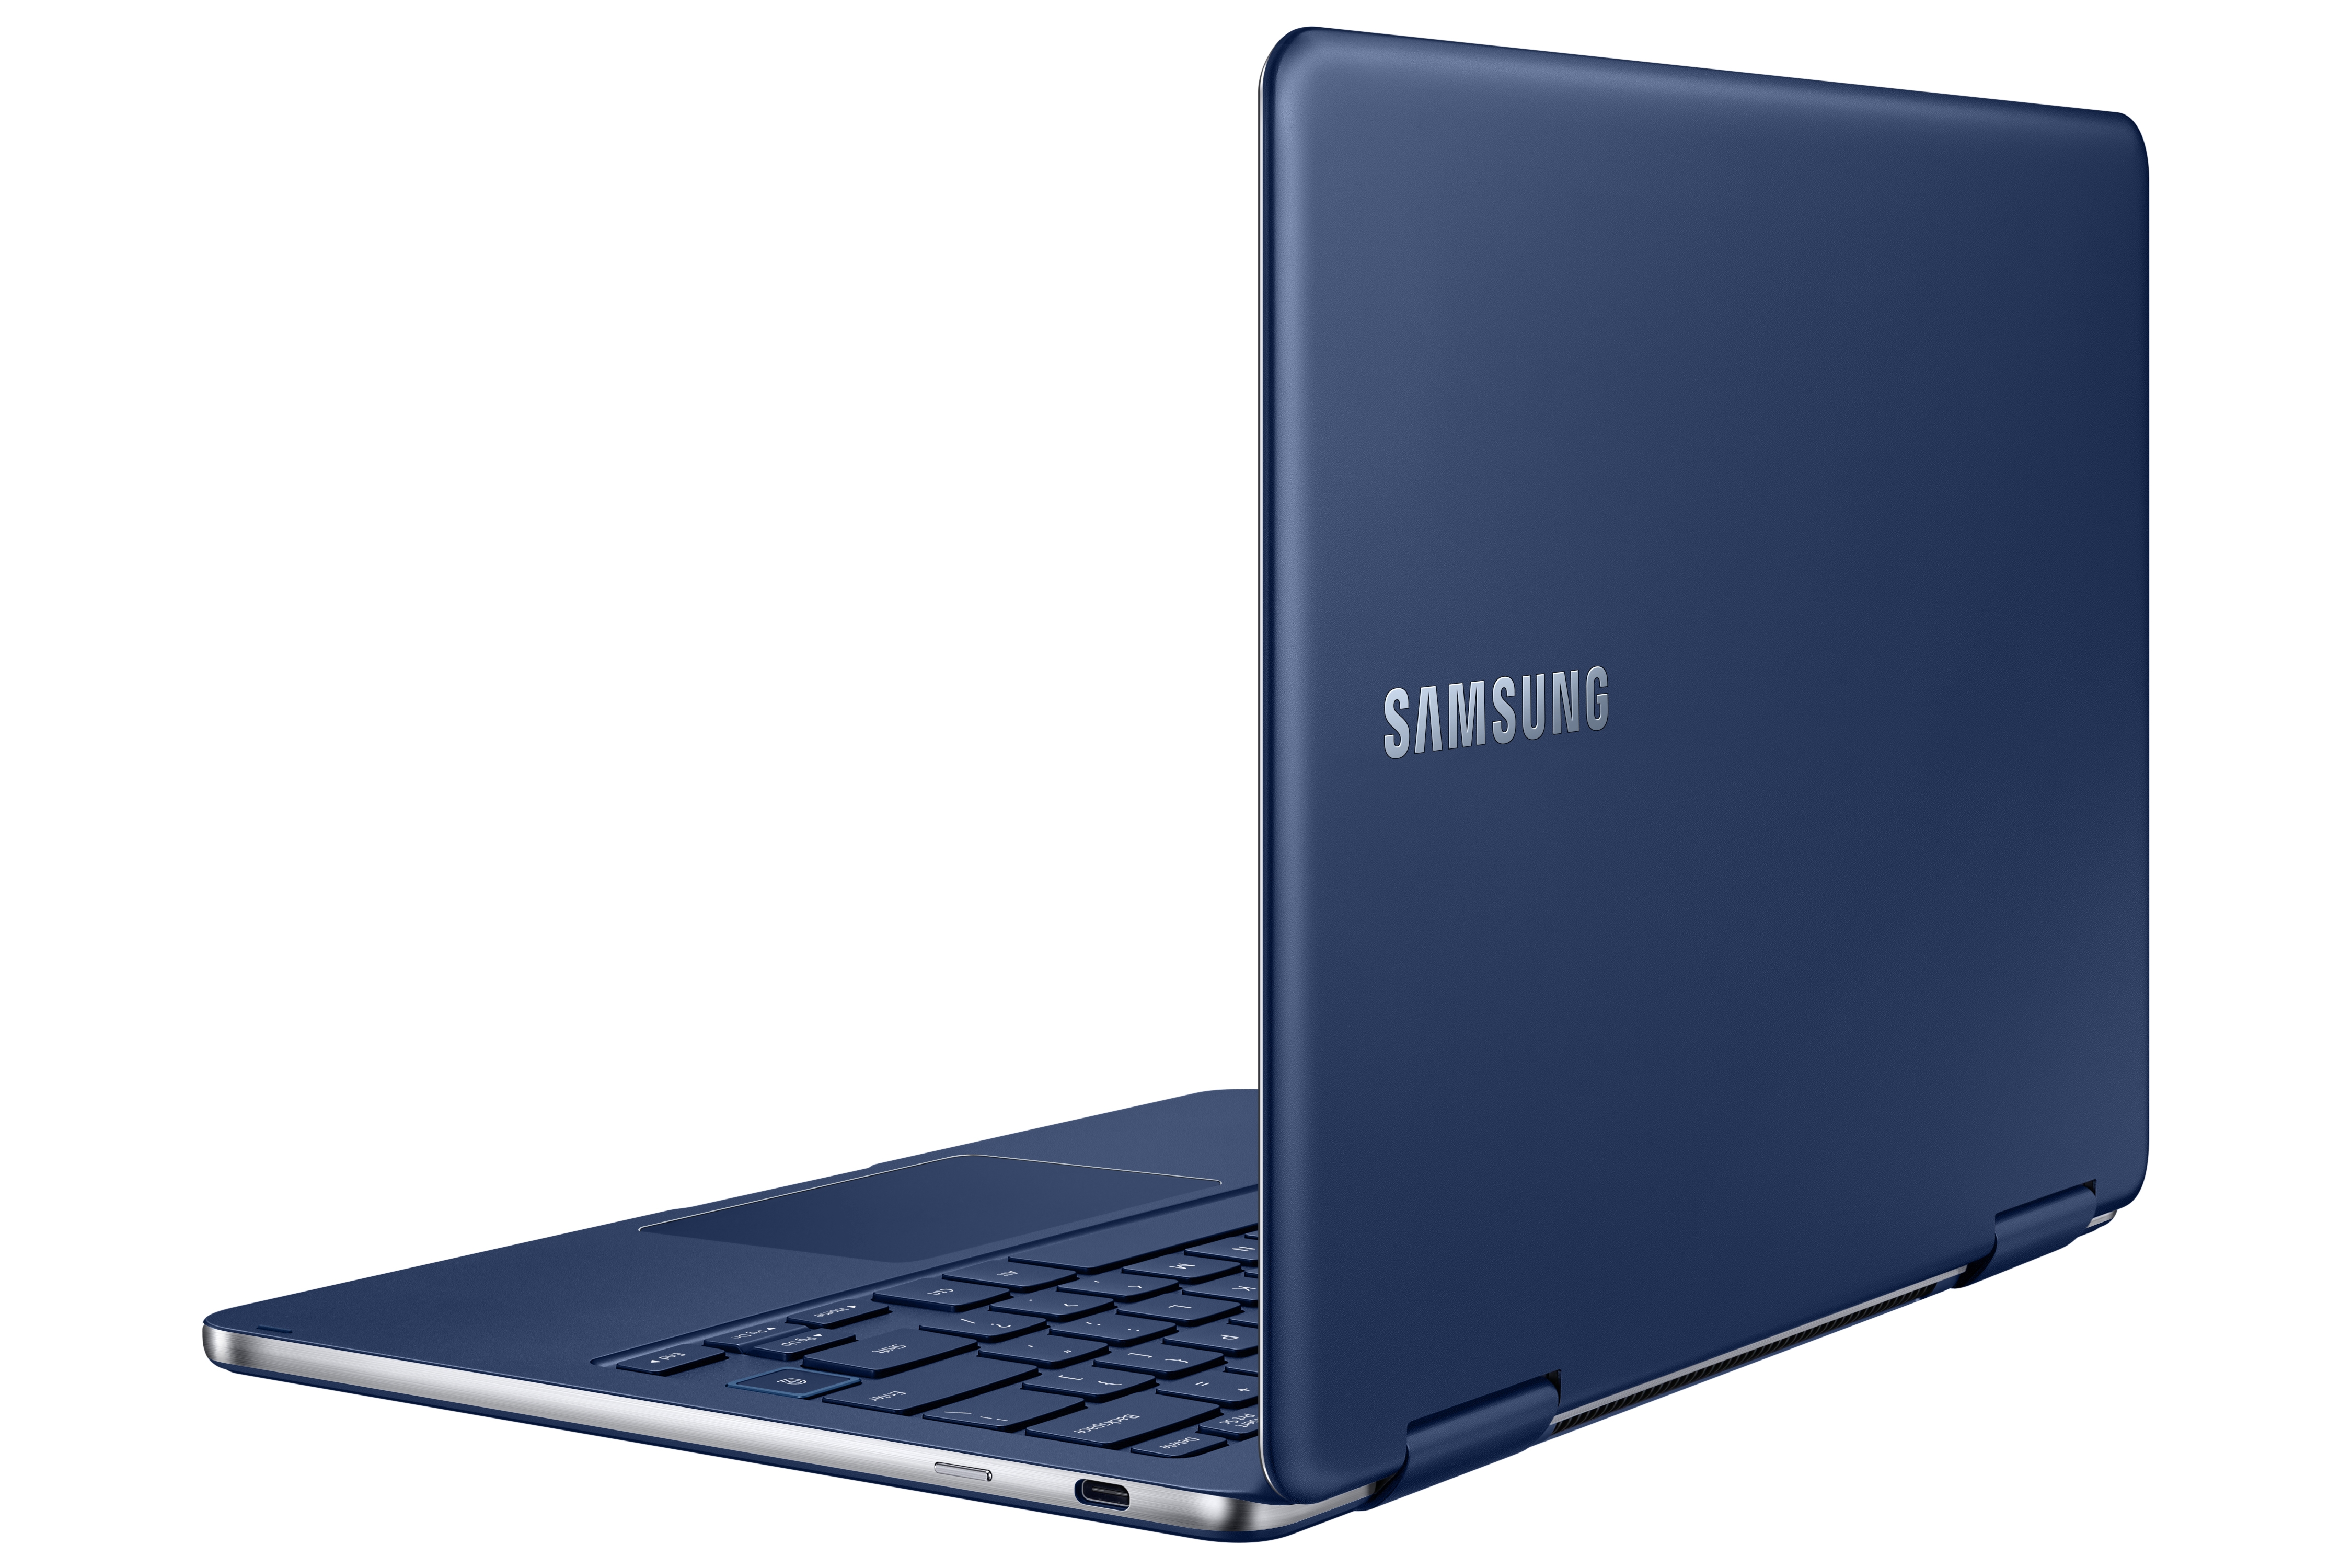 Samsung Notebook 9 Pen, Notebook 9 (2018) and Notebook 7 Spin